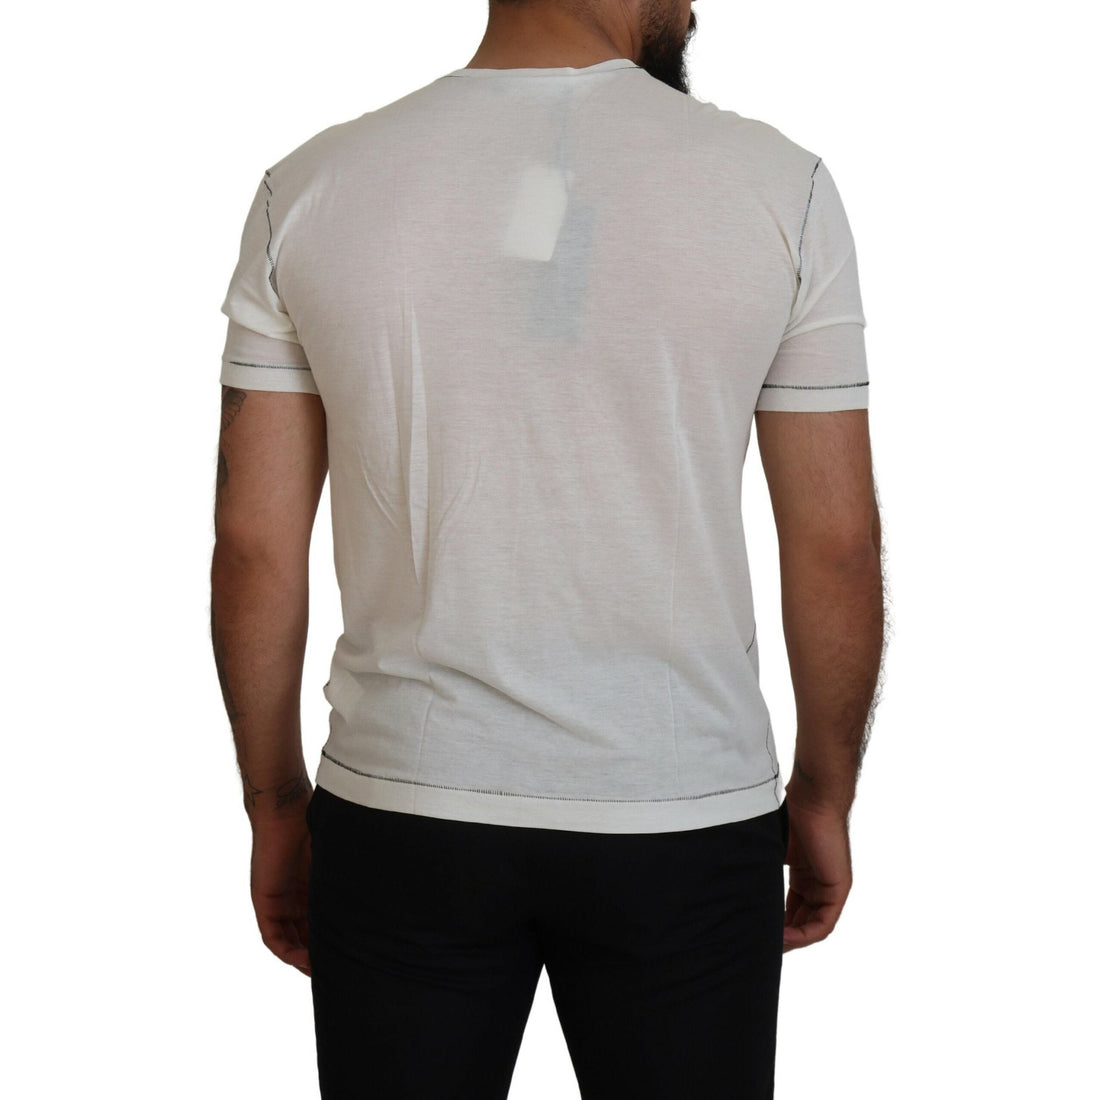 Dolce & Gabbana White Printed Short Sleeves Men T-shirt